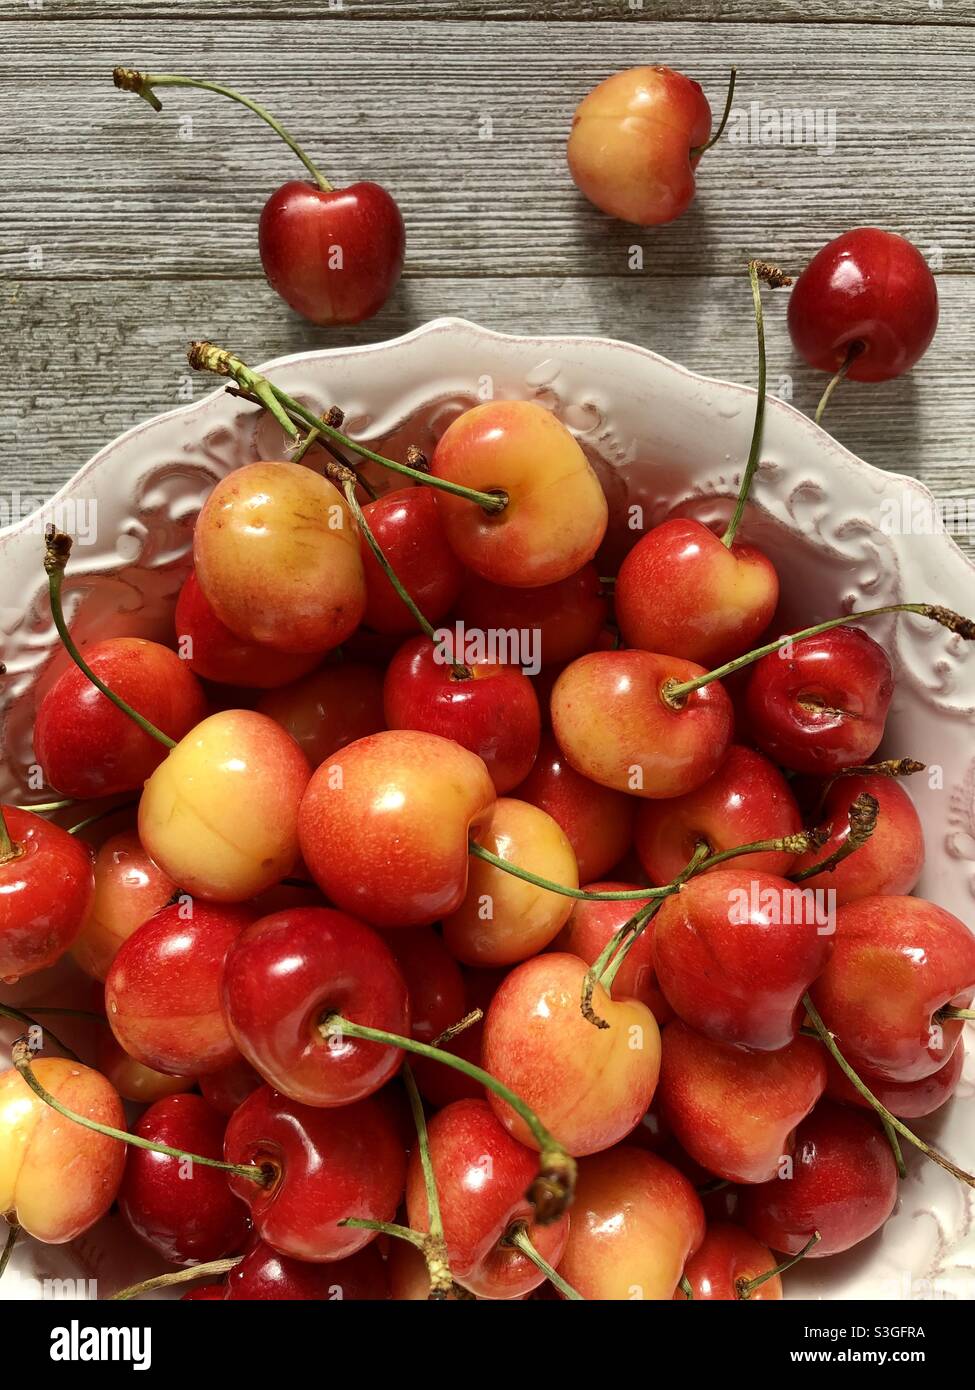 Top view of a bowl of rainier cherries Stock Photo